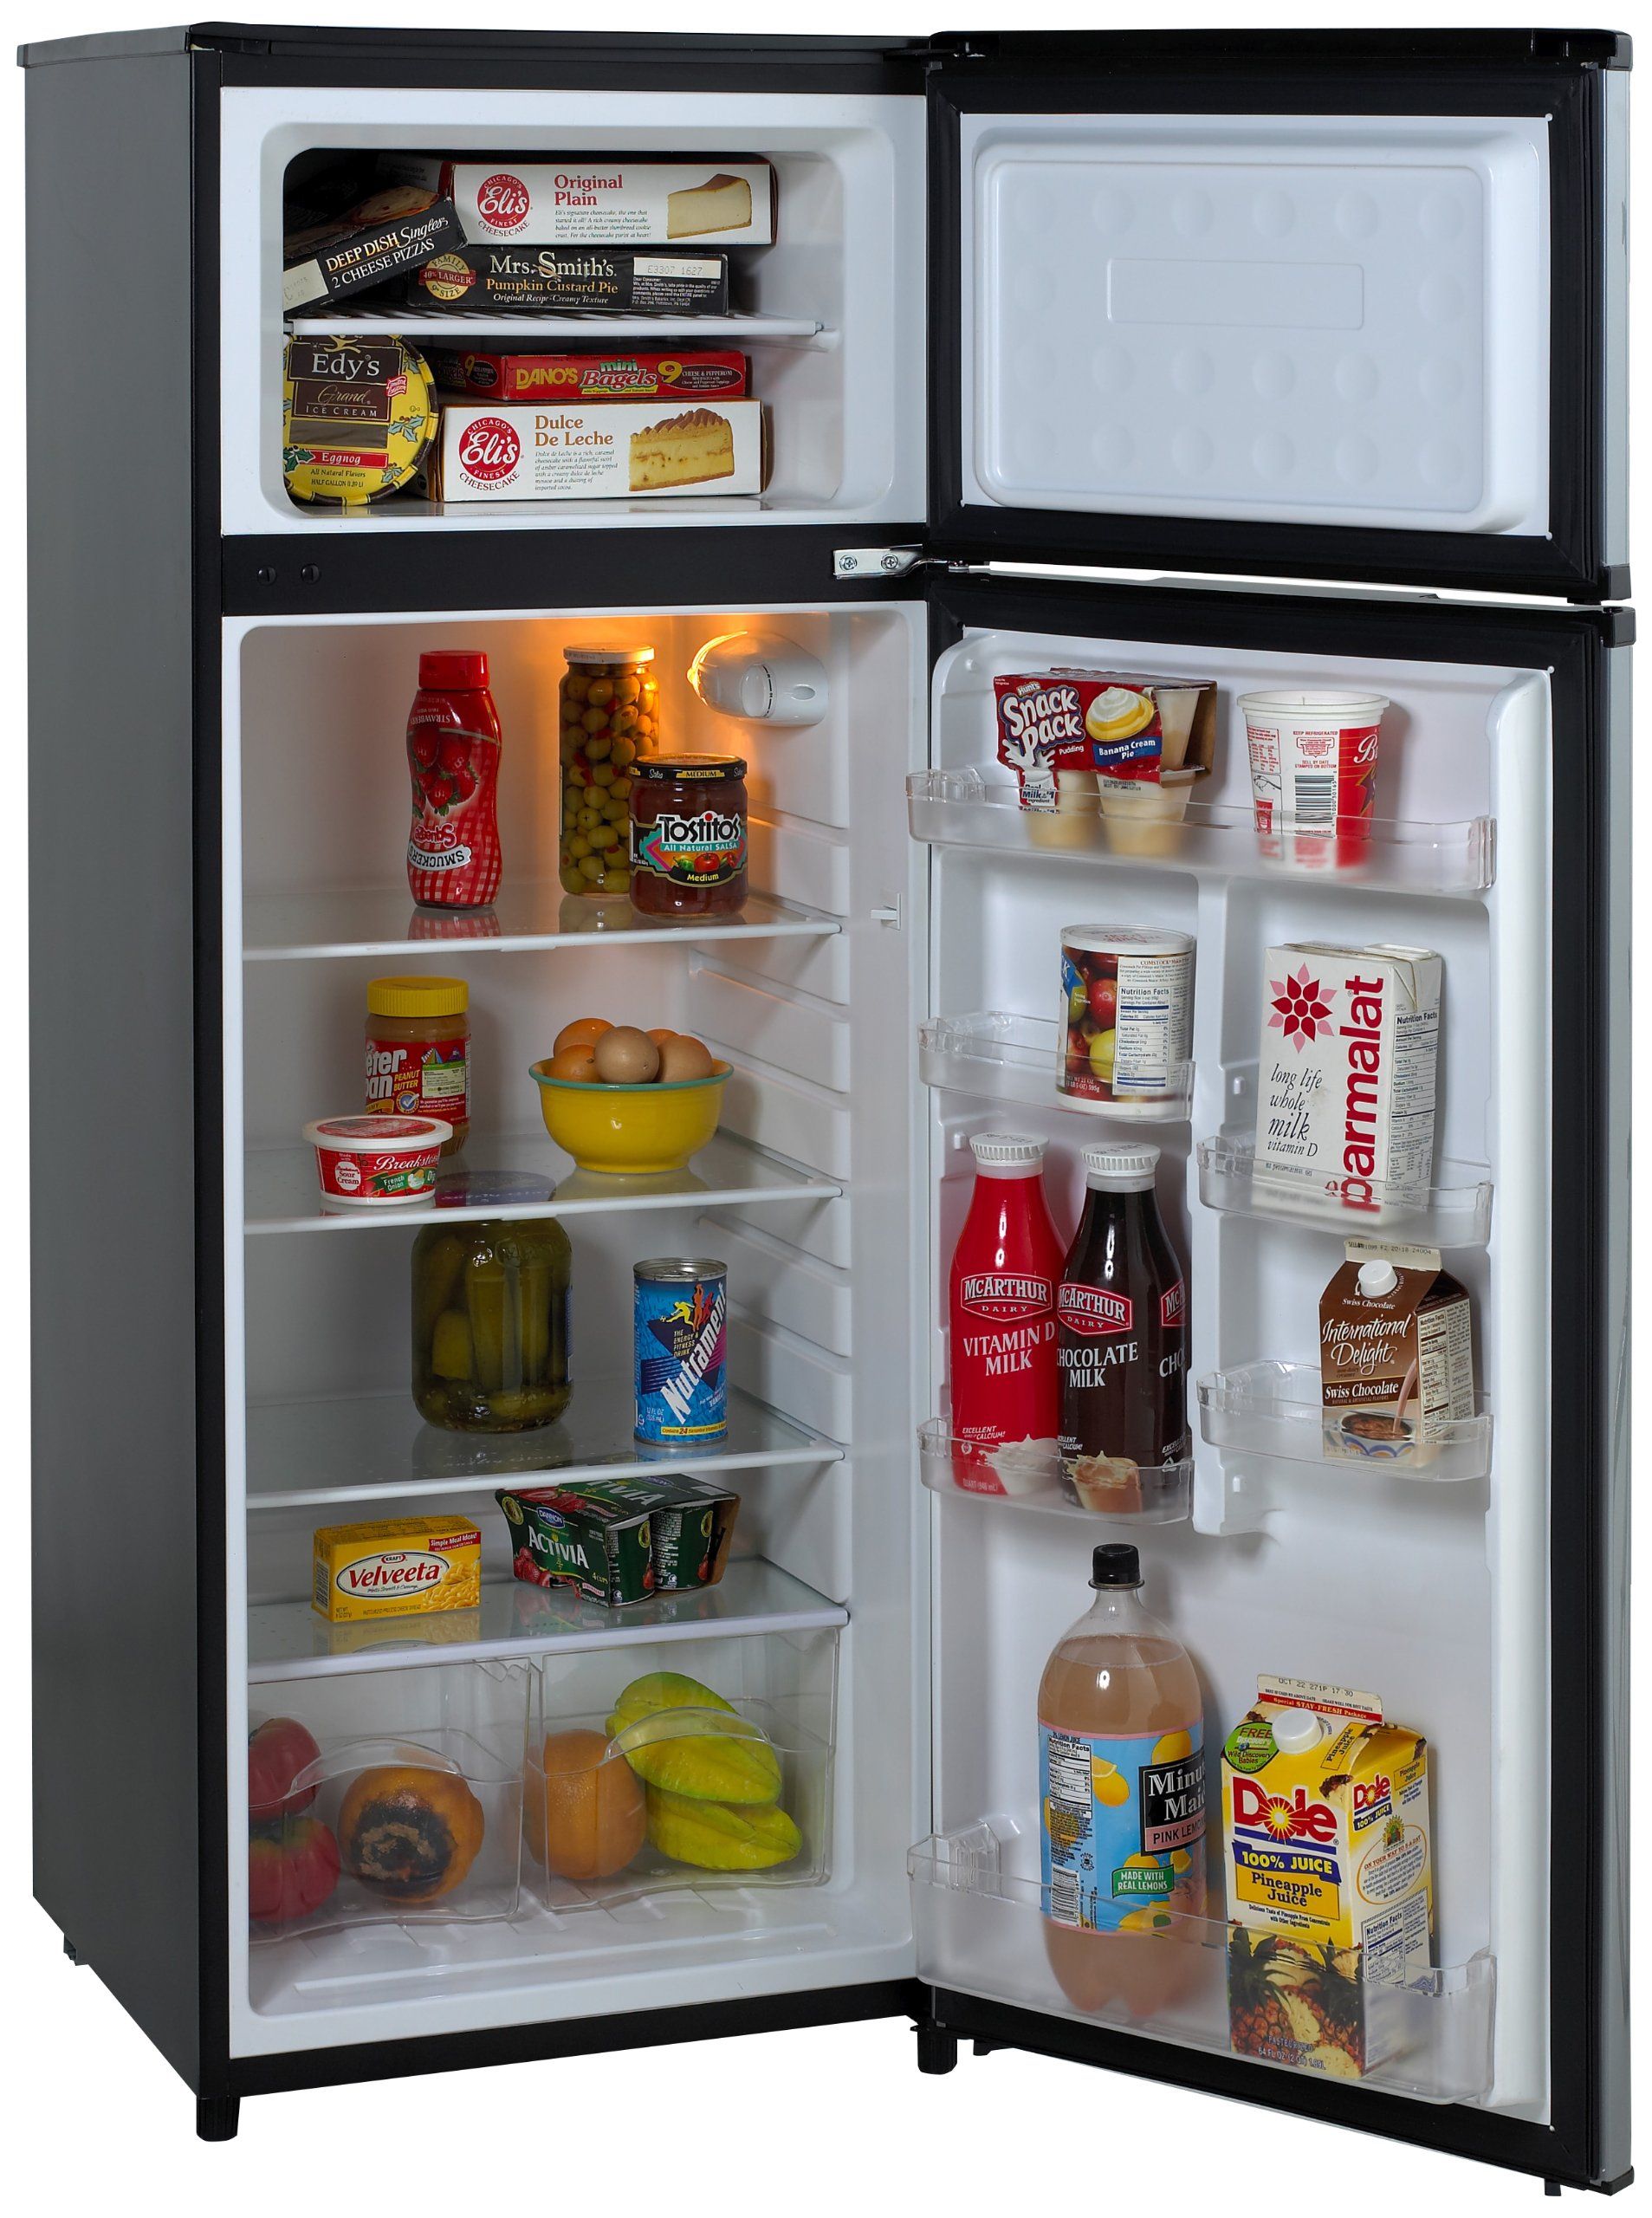 Avanti RA7316PST 7.4 Cubic Foot Apartment Size Refrigerator, Black Platinum - image 3 of 3